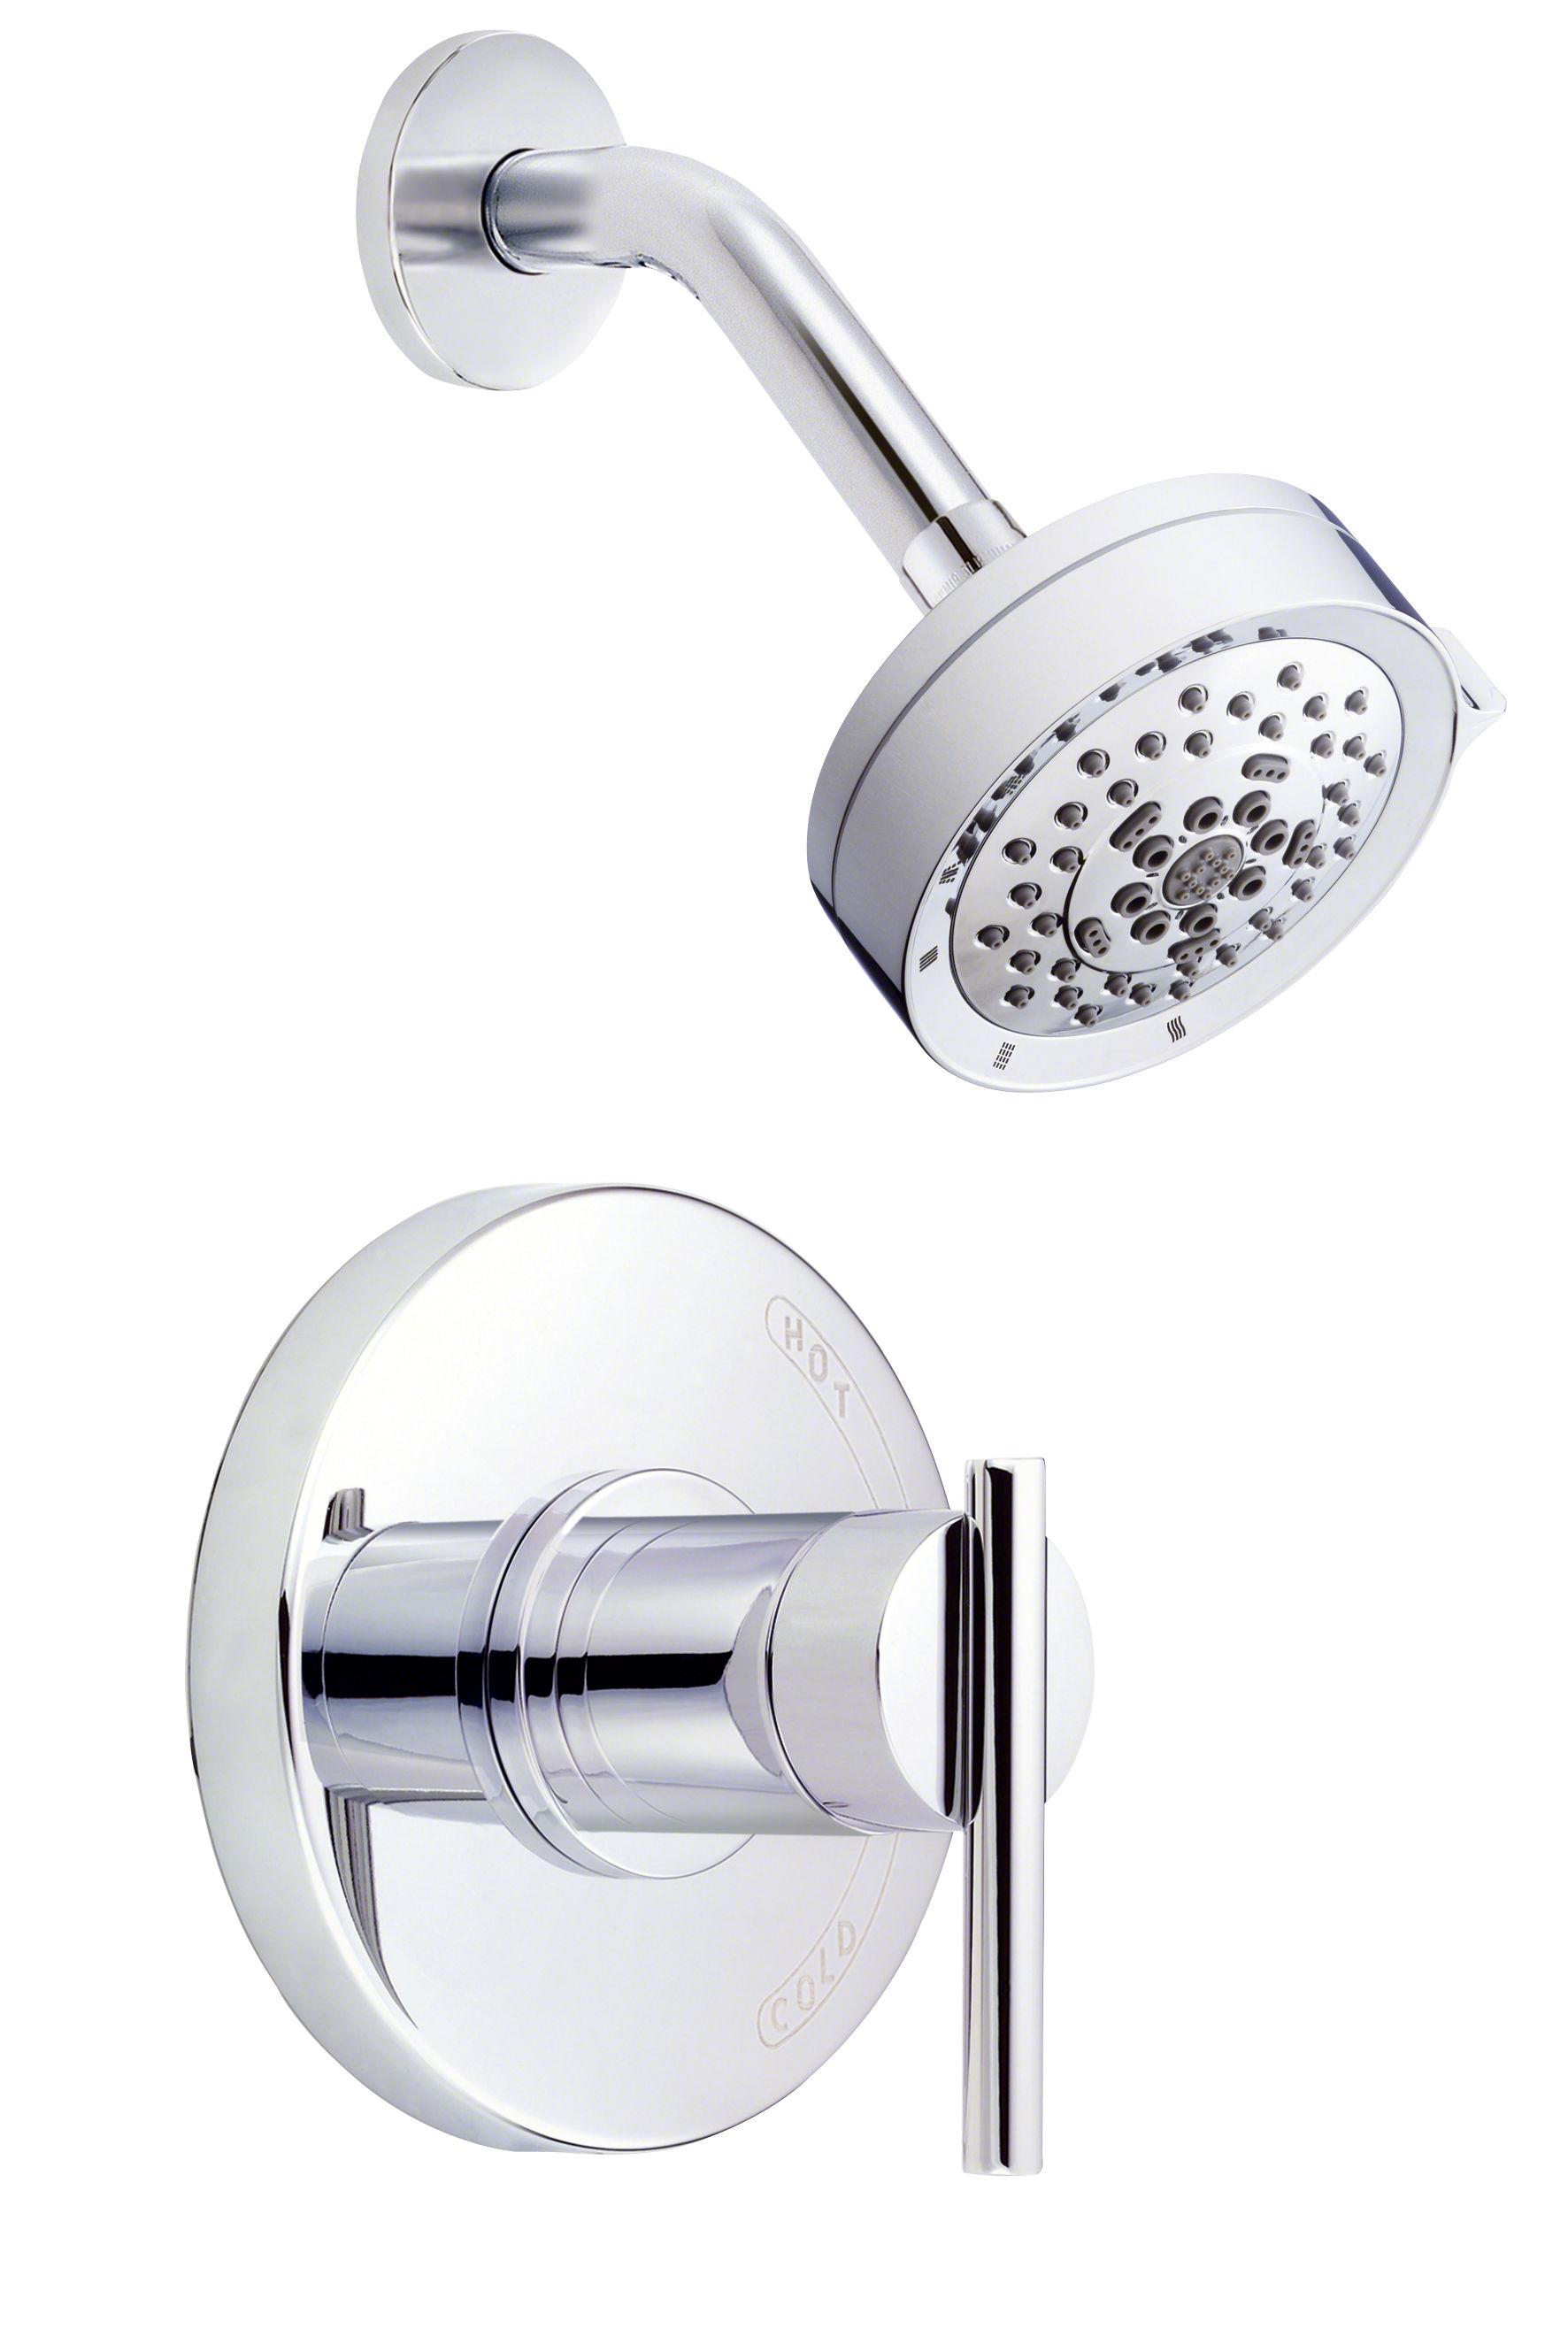 Danze D512558bnt Brushed Nickel Pressure Balanced Shower Trim